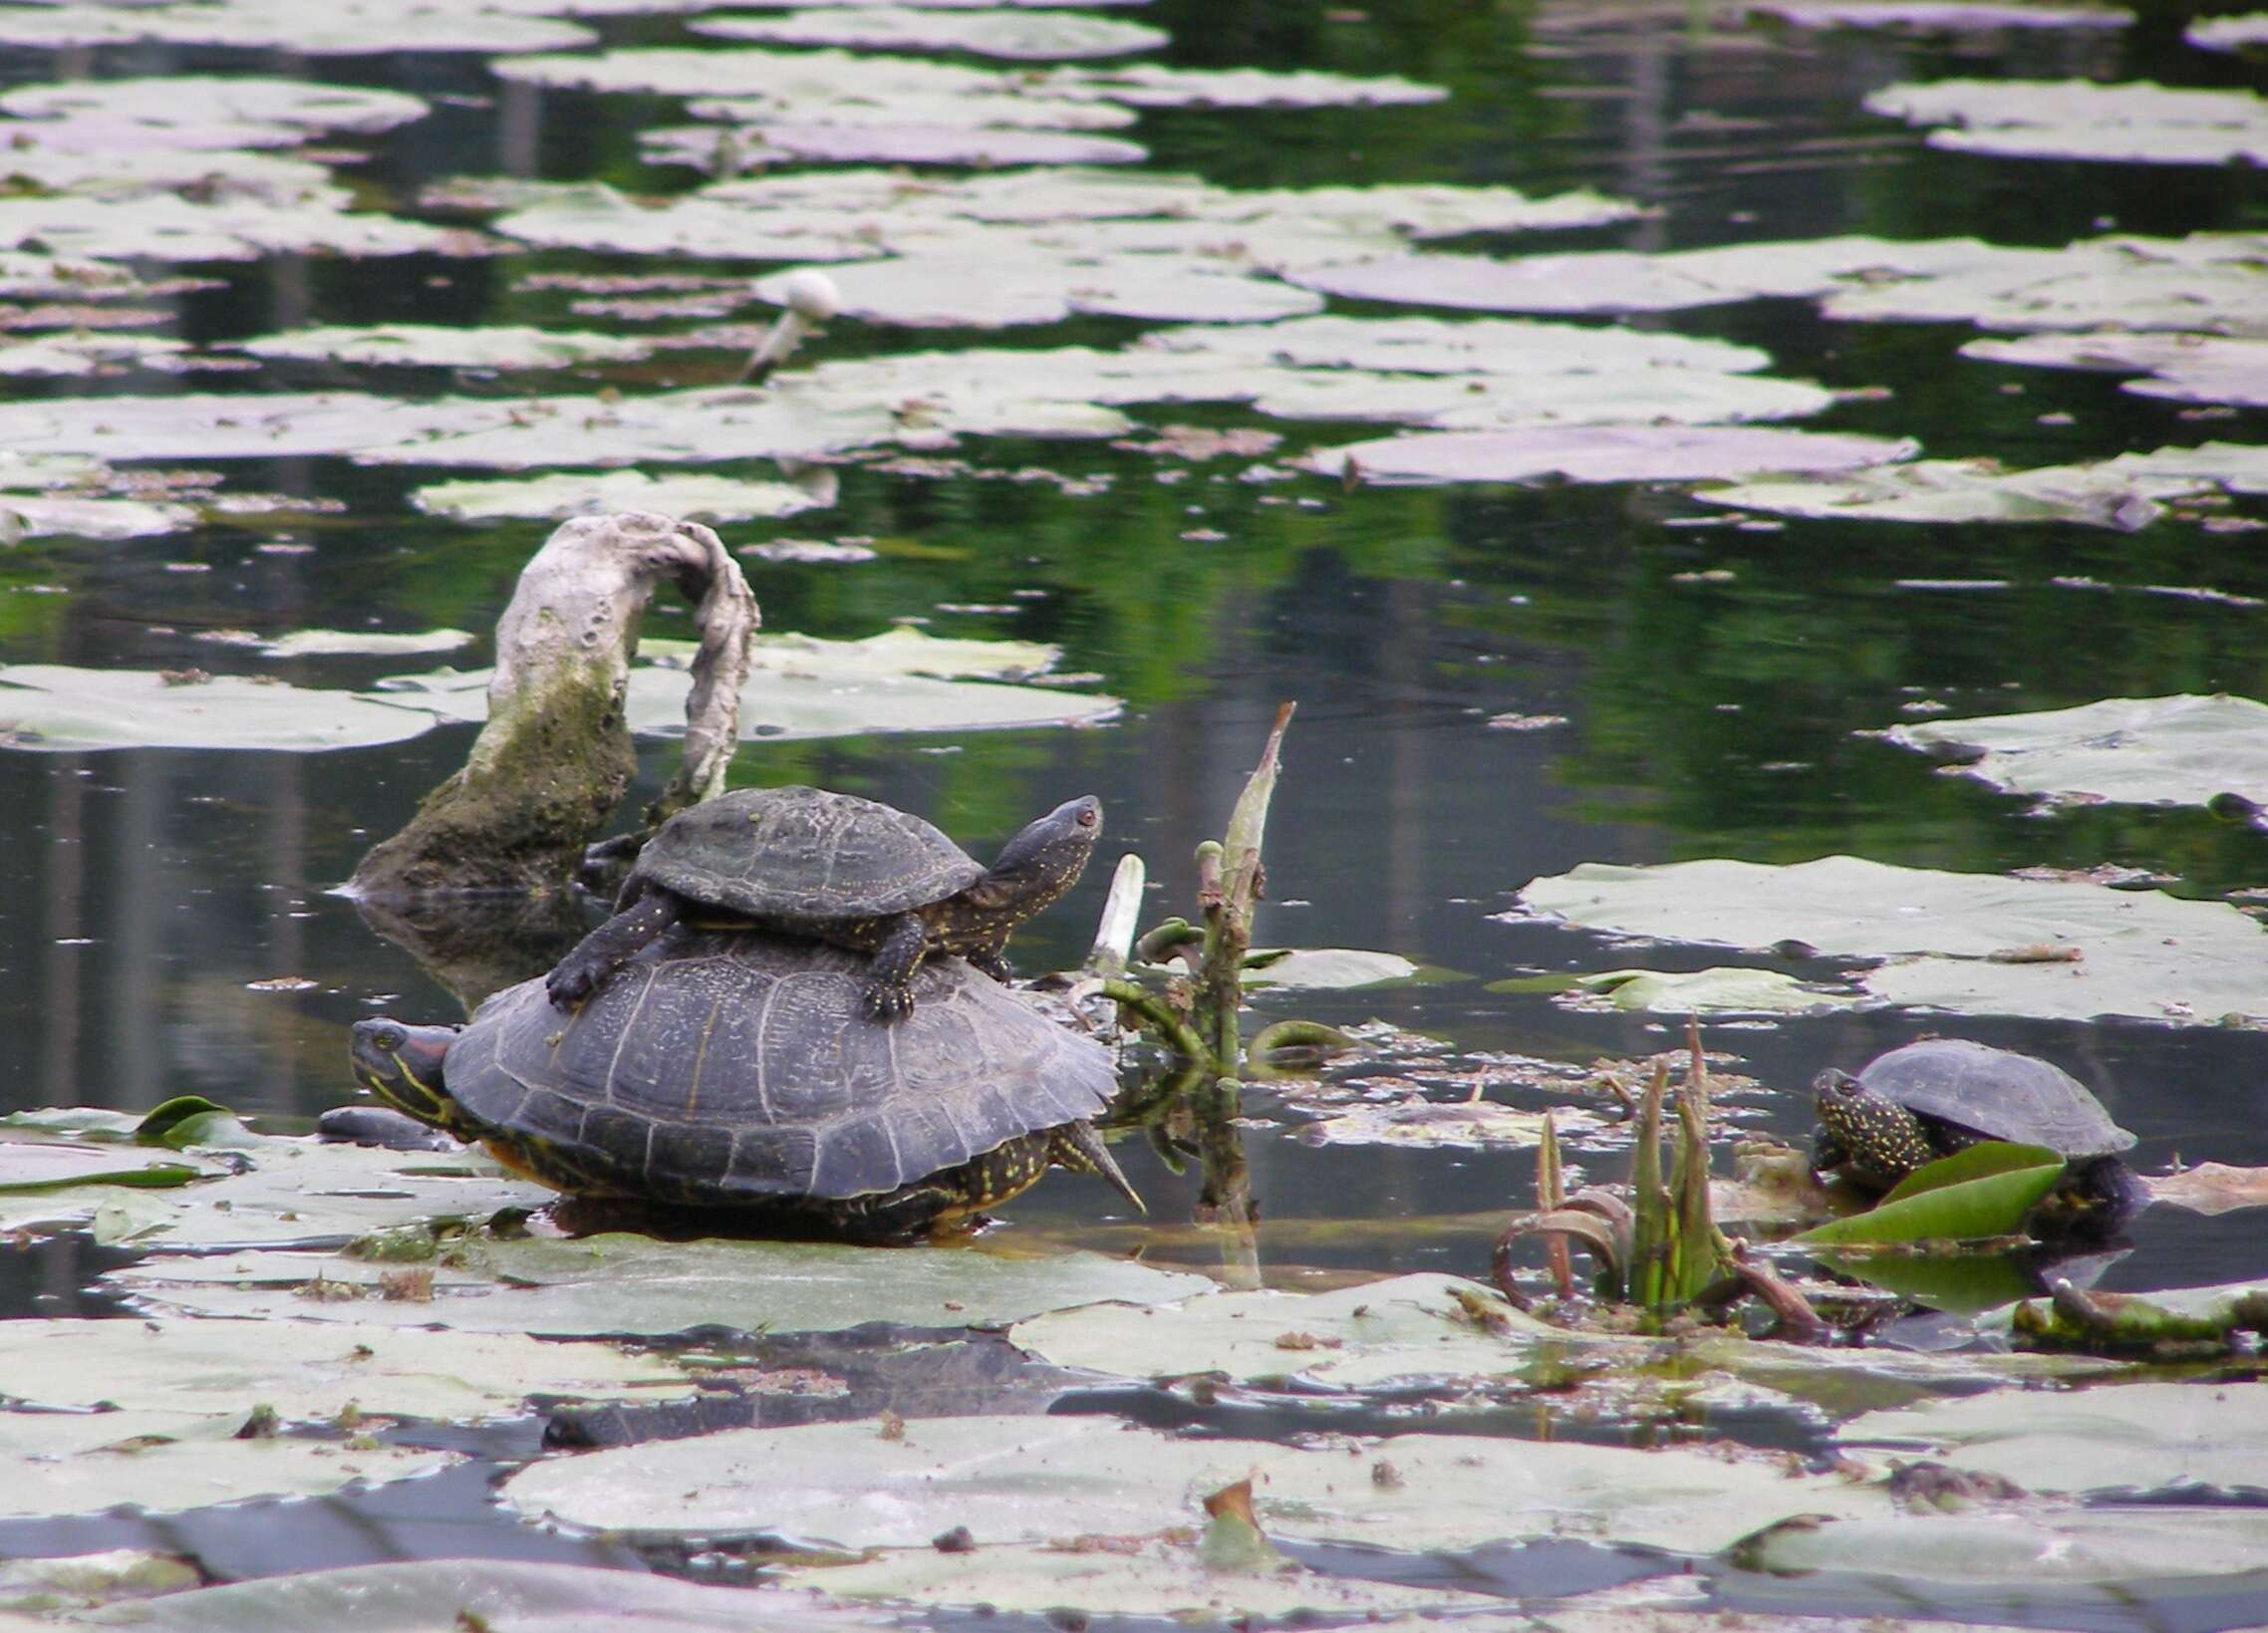 Image of Black-breasted Leaf Turtle